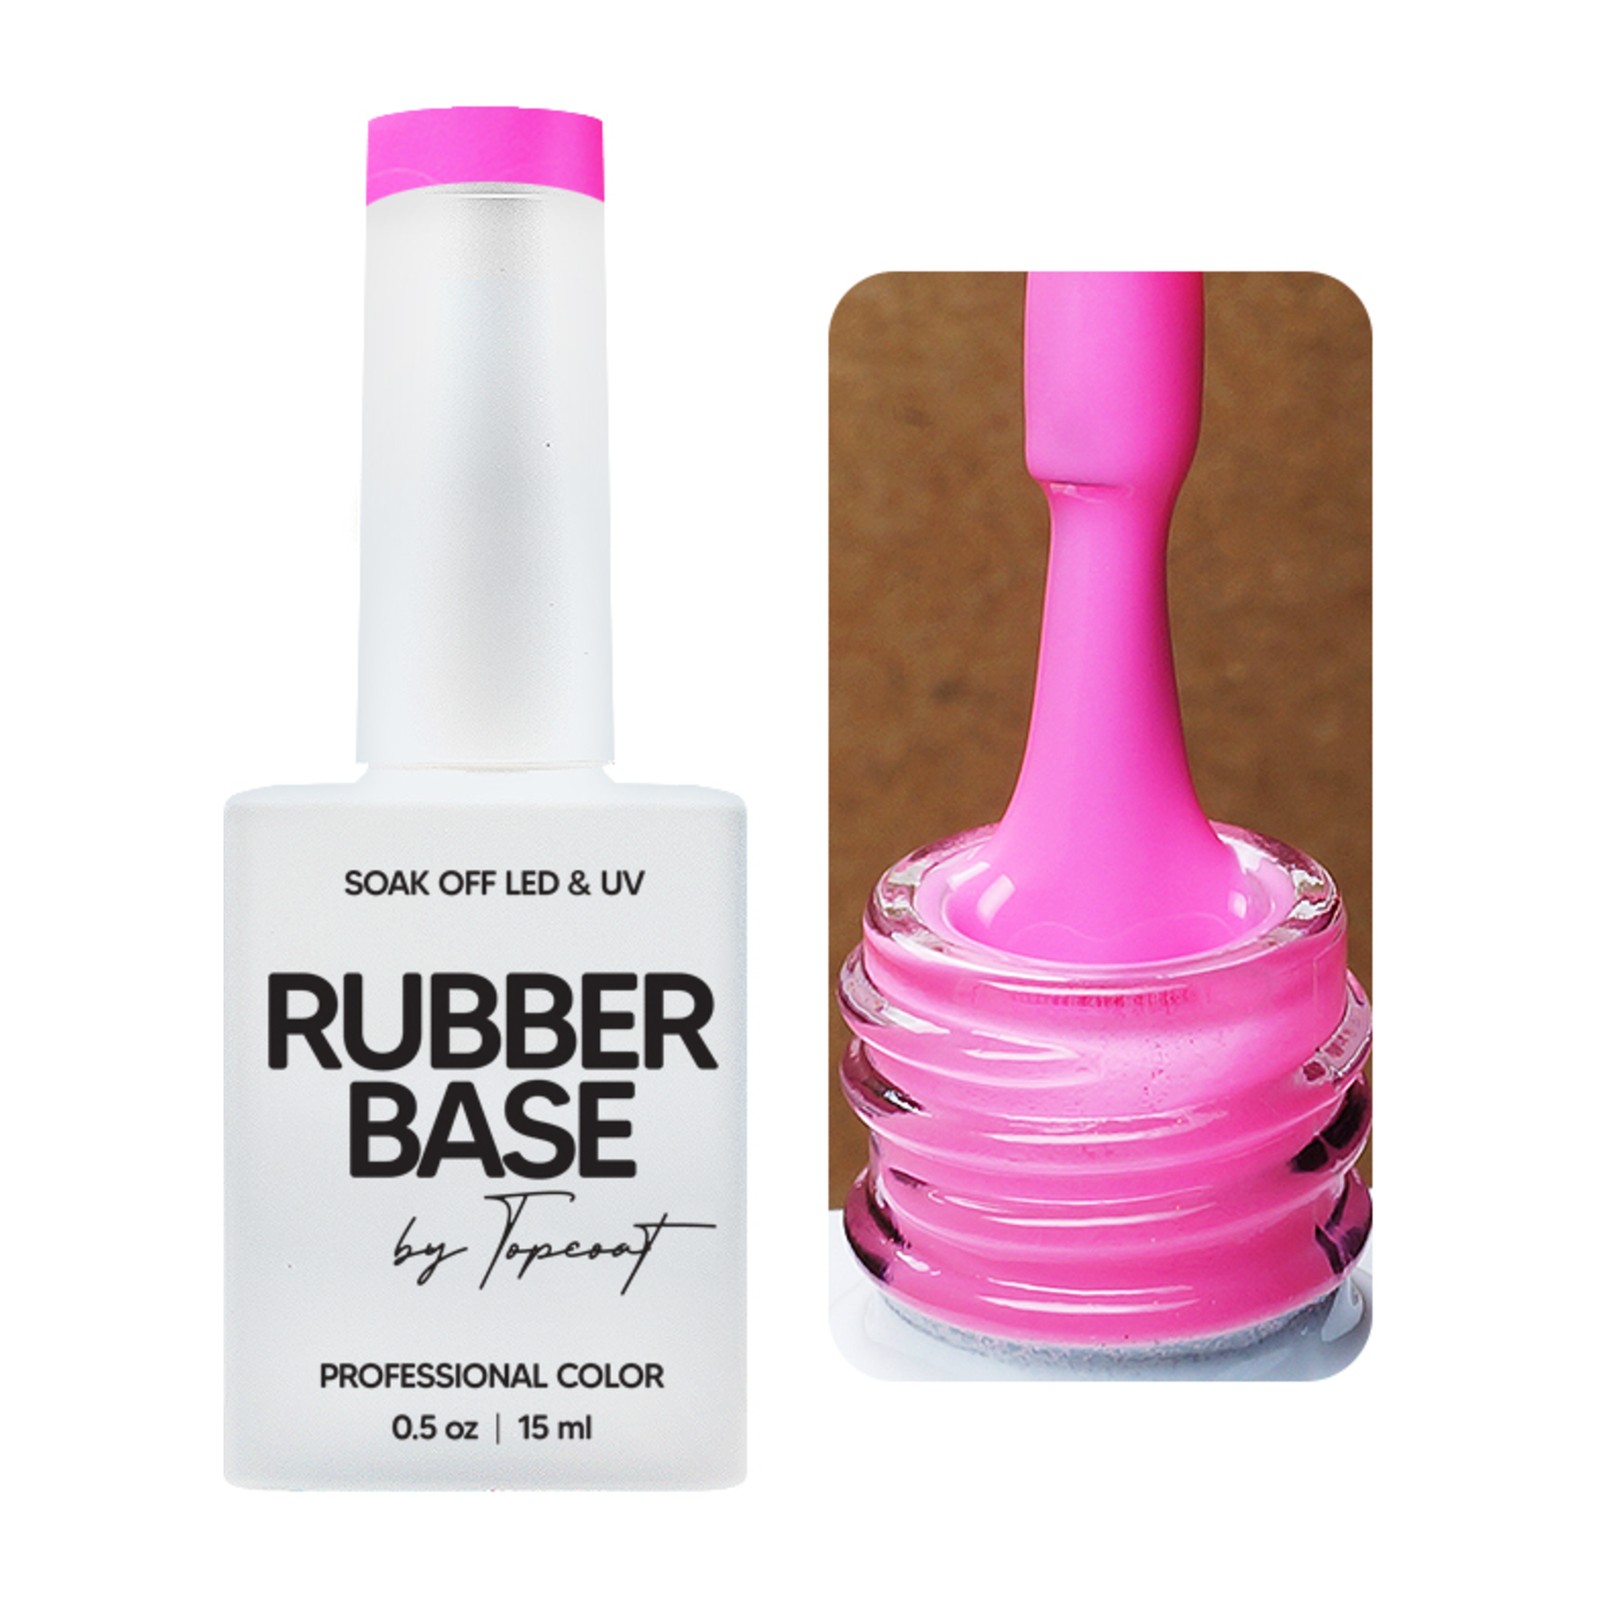 Overjakke -  Gummi base -  Barbie samling -  Hindbær Pink -  15 ml